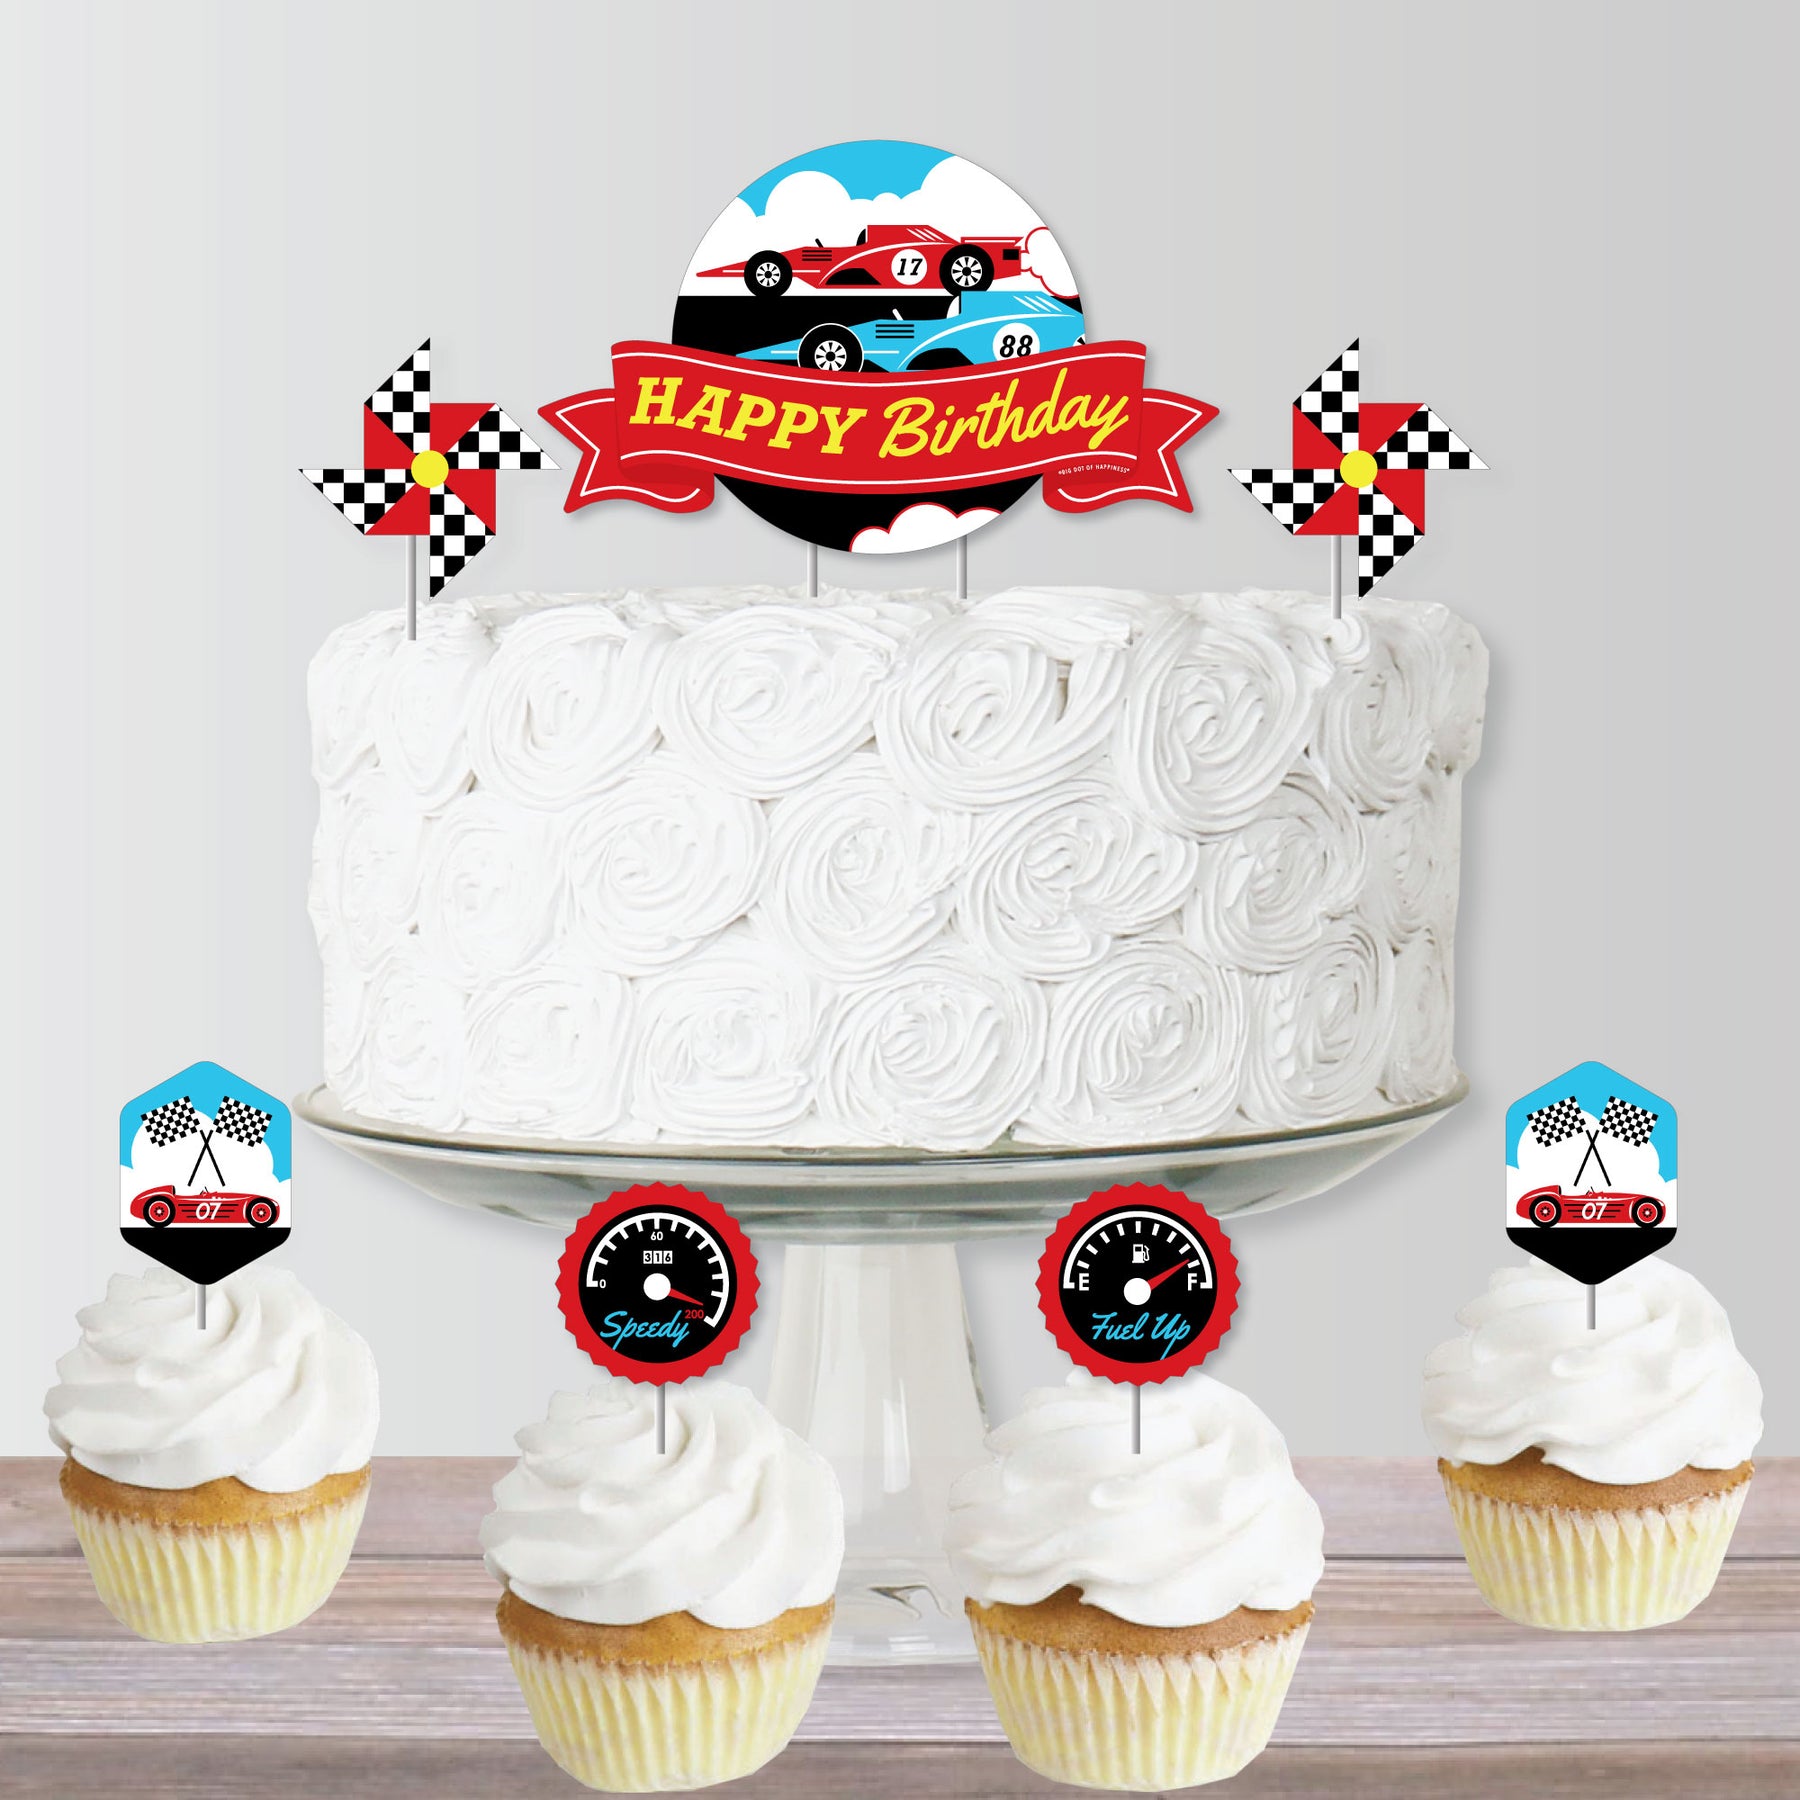 Racing car cake toppers. Edible personalised birthday fondant cake topper  set. | eBay